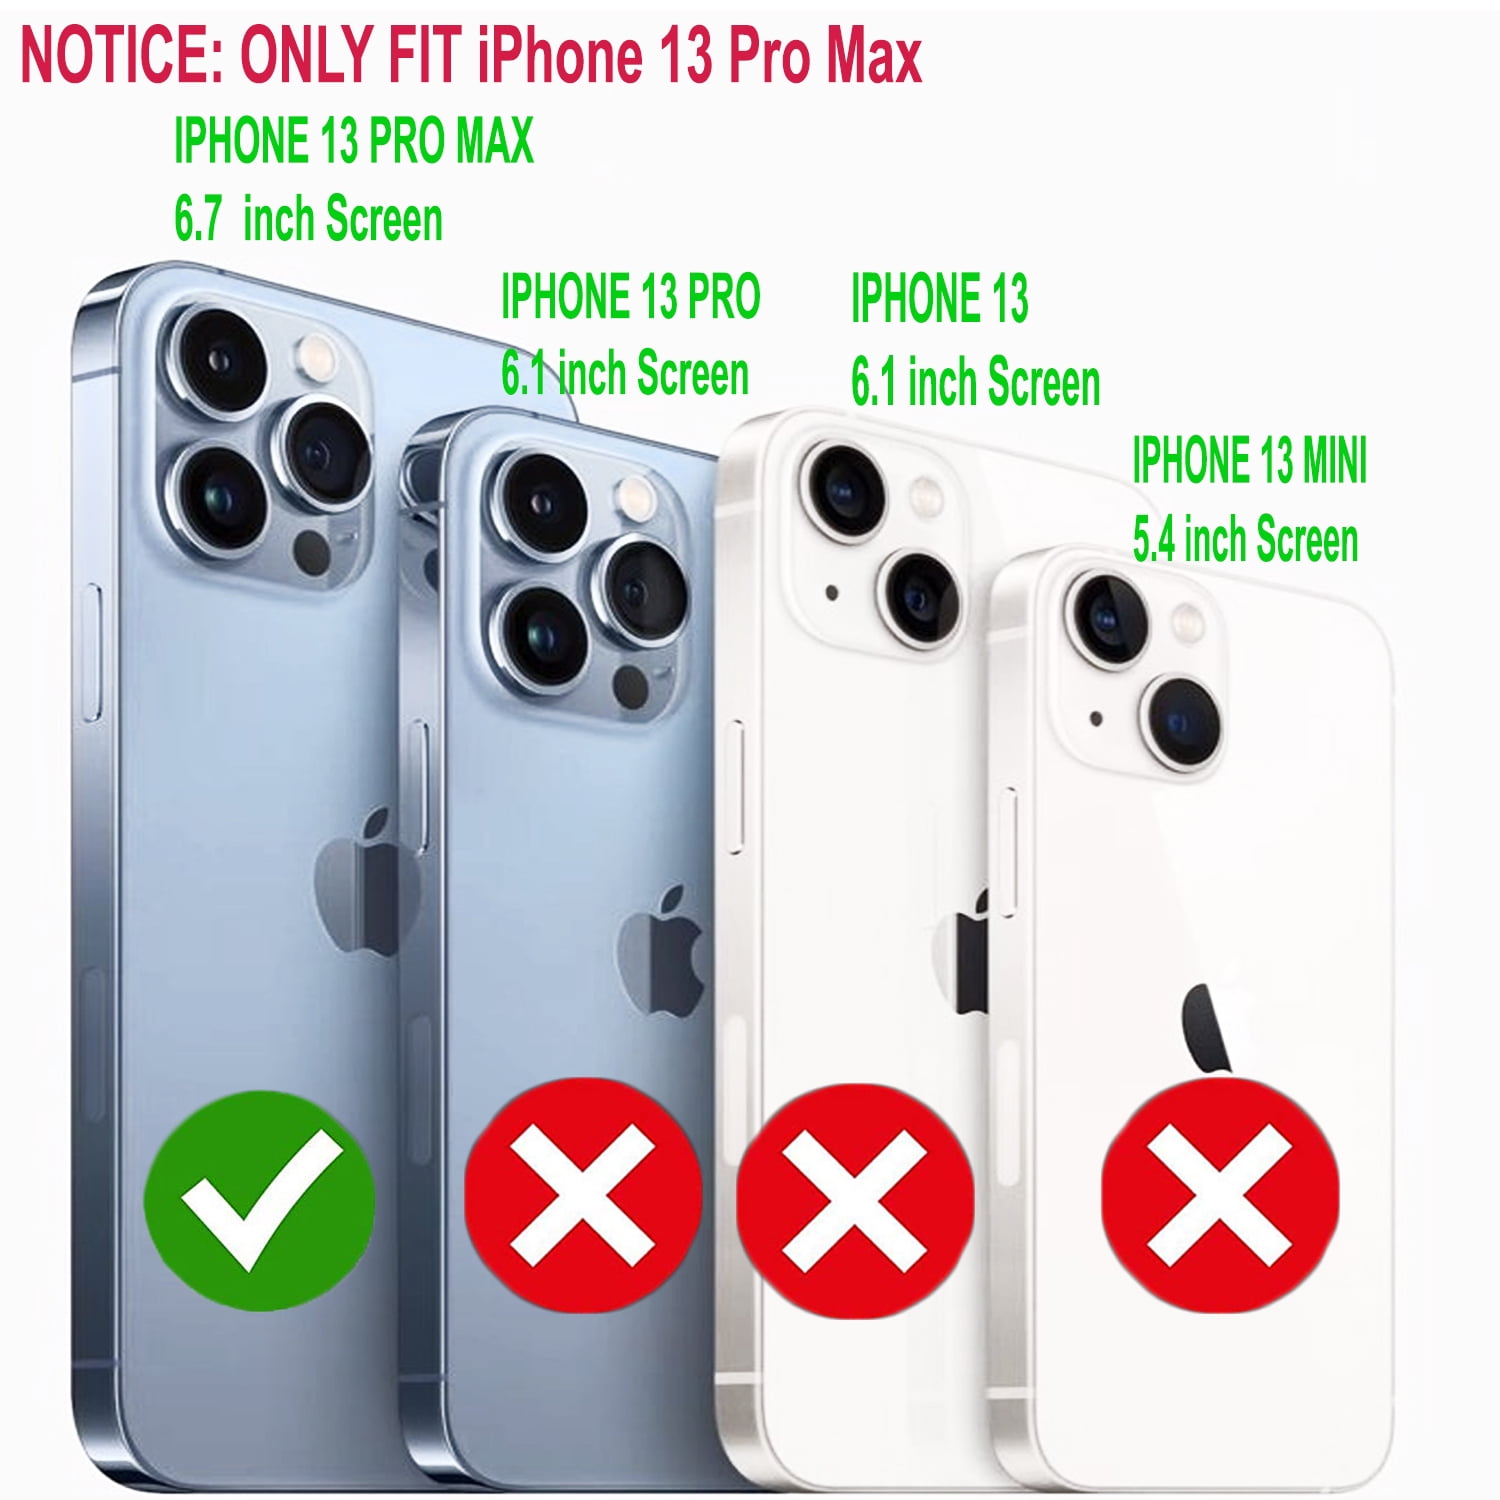 iPhone 13 vs iPhone 13 mini vs iPhone 13 Pro vs iPhone 13 Pro Max